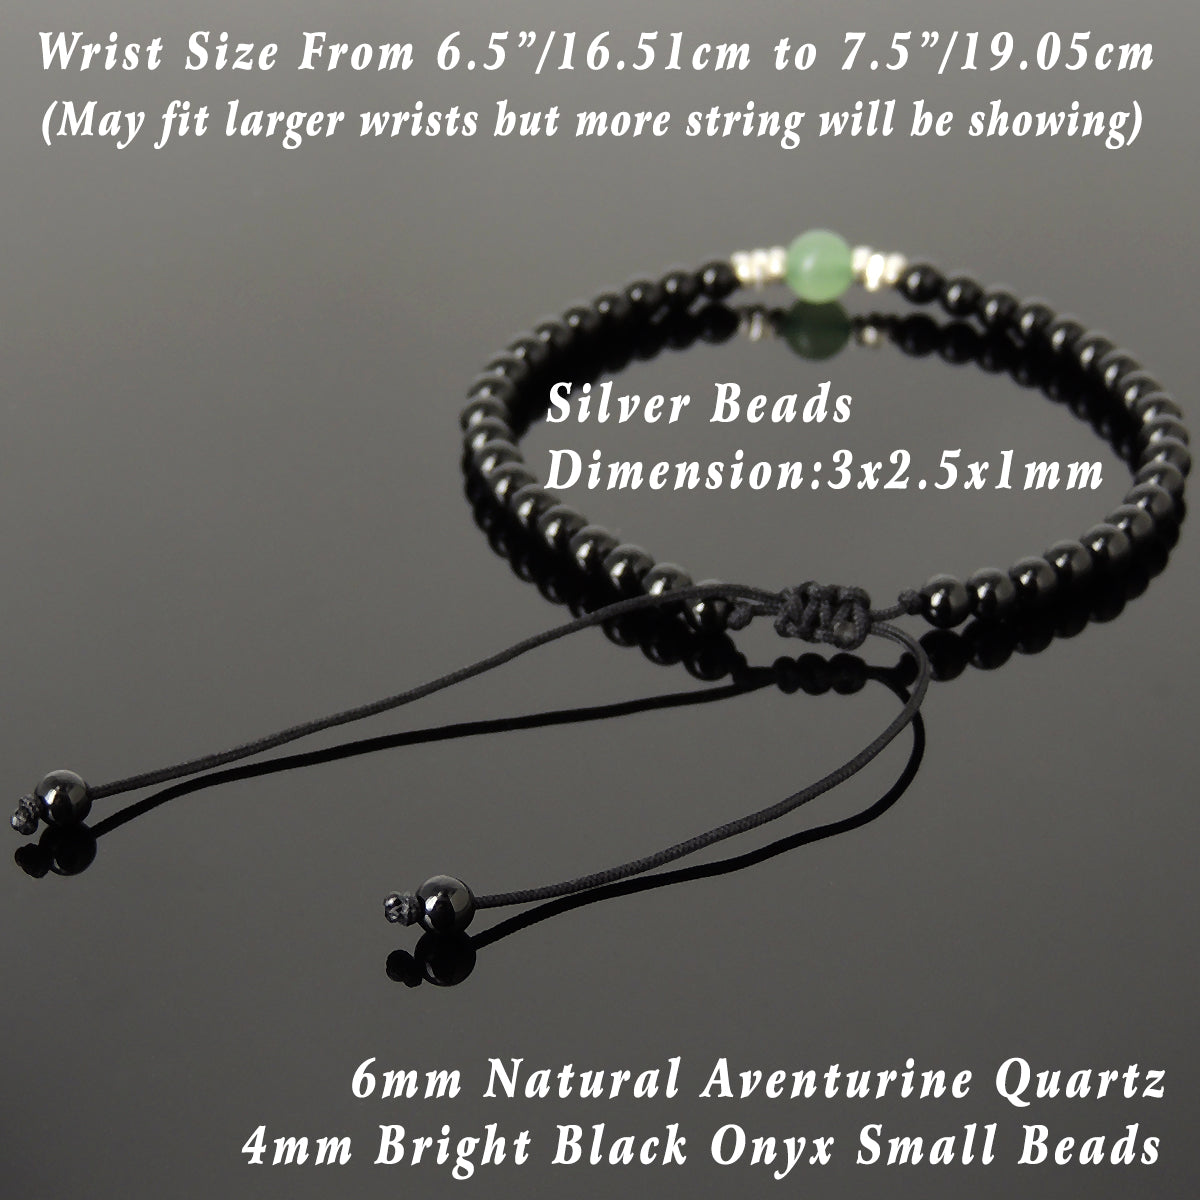 Aventurine Quartz & Bright Black Onyx Adjustable Braided Bracelet with S925 Sterling Silver Nugget Beads - Handmade by Gem & Silver BR1204